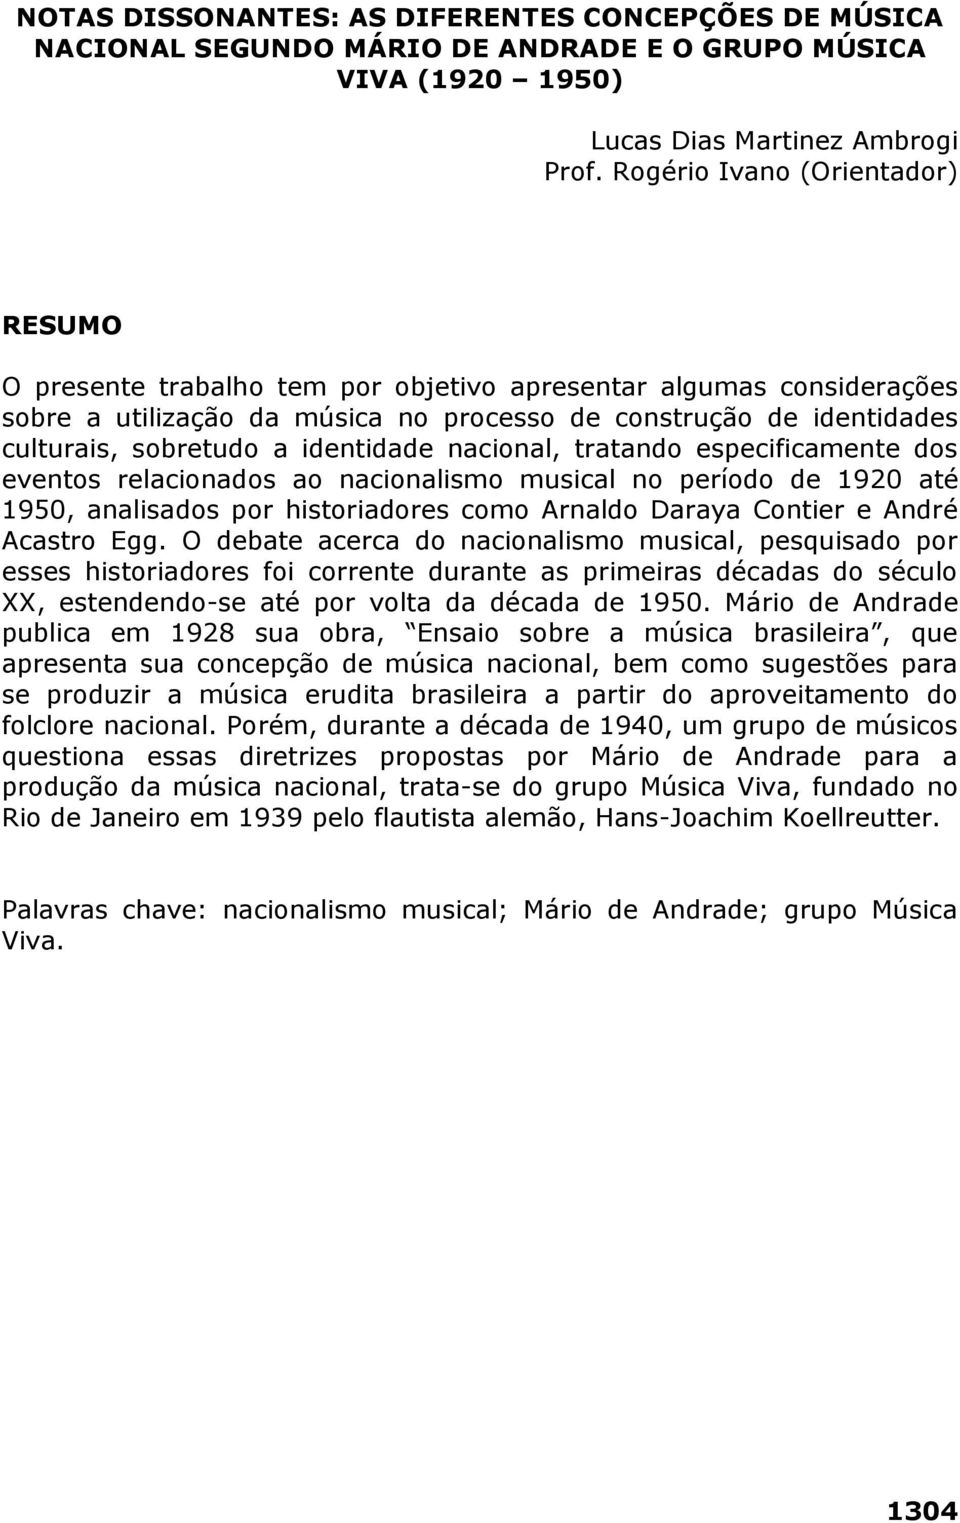 identidade nacional, tratando especificamente dos eventos relacionados ao nacionalismo musical no período de 1920 até 1950, analisados por historiadores como Arnaldo Daraya Contier e André Acastro